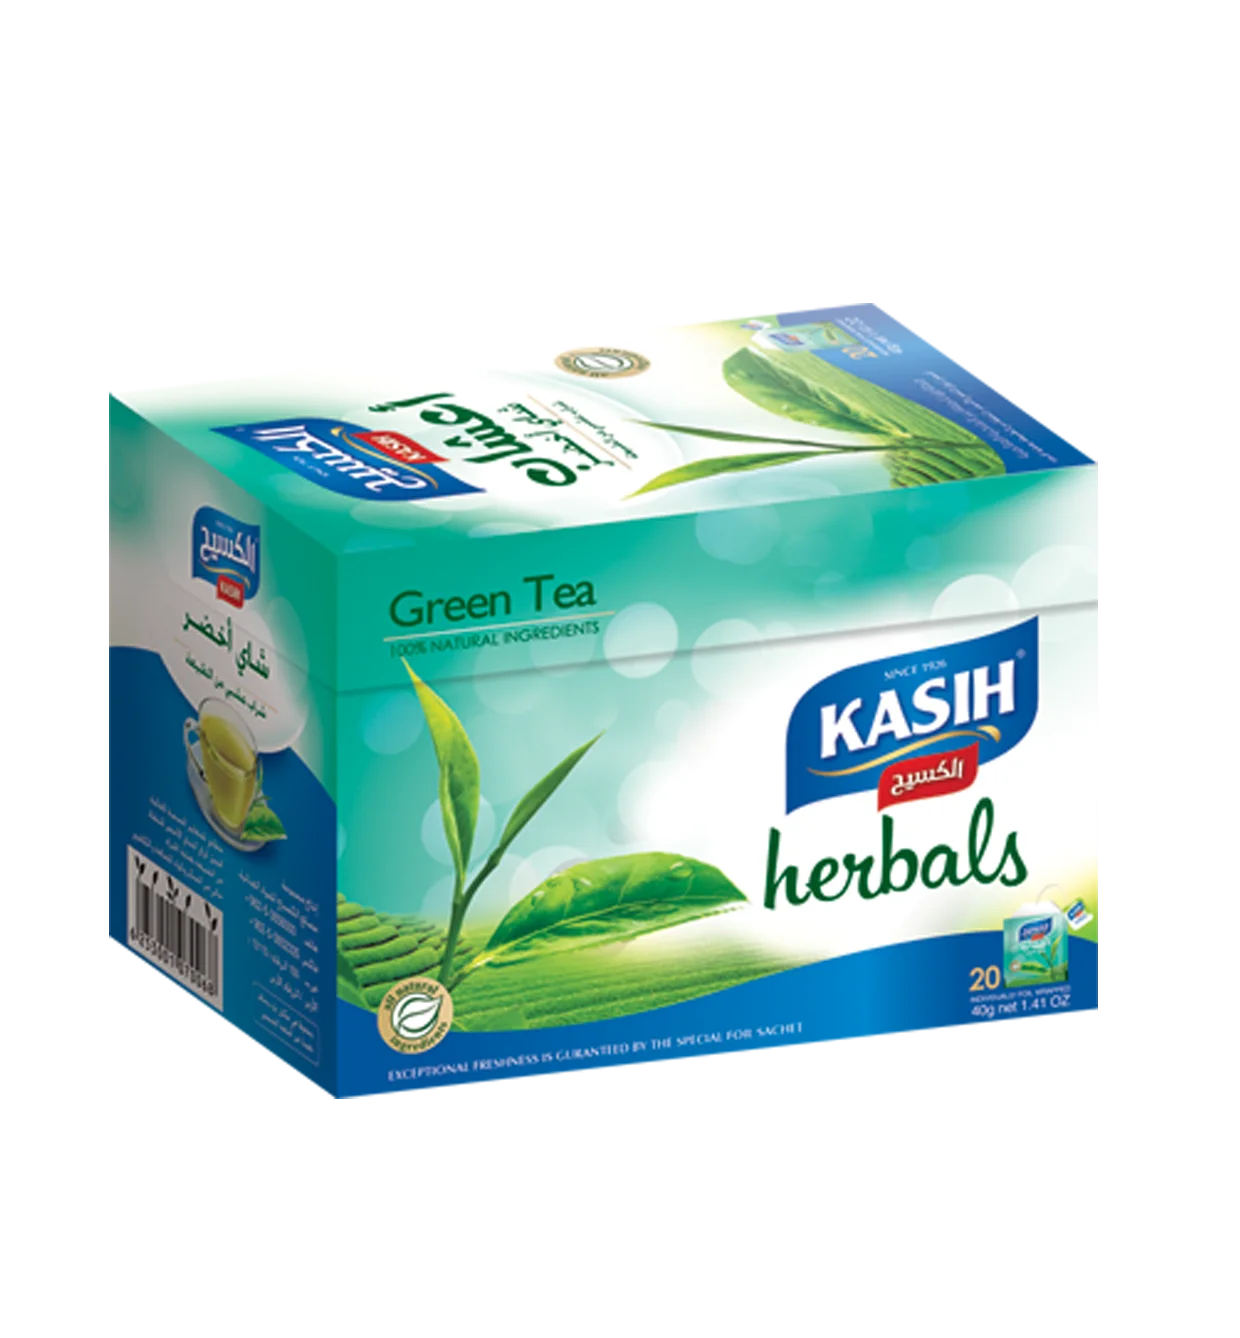 KASIH herbals green tea